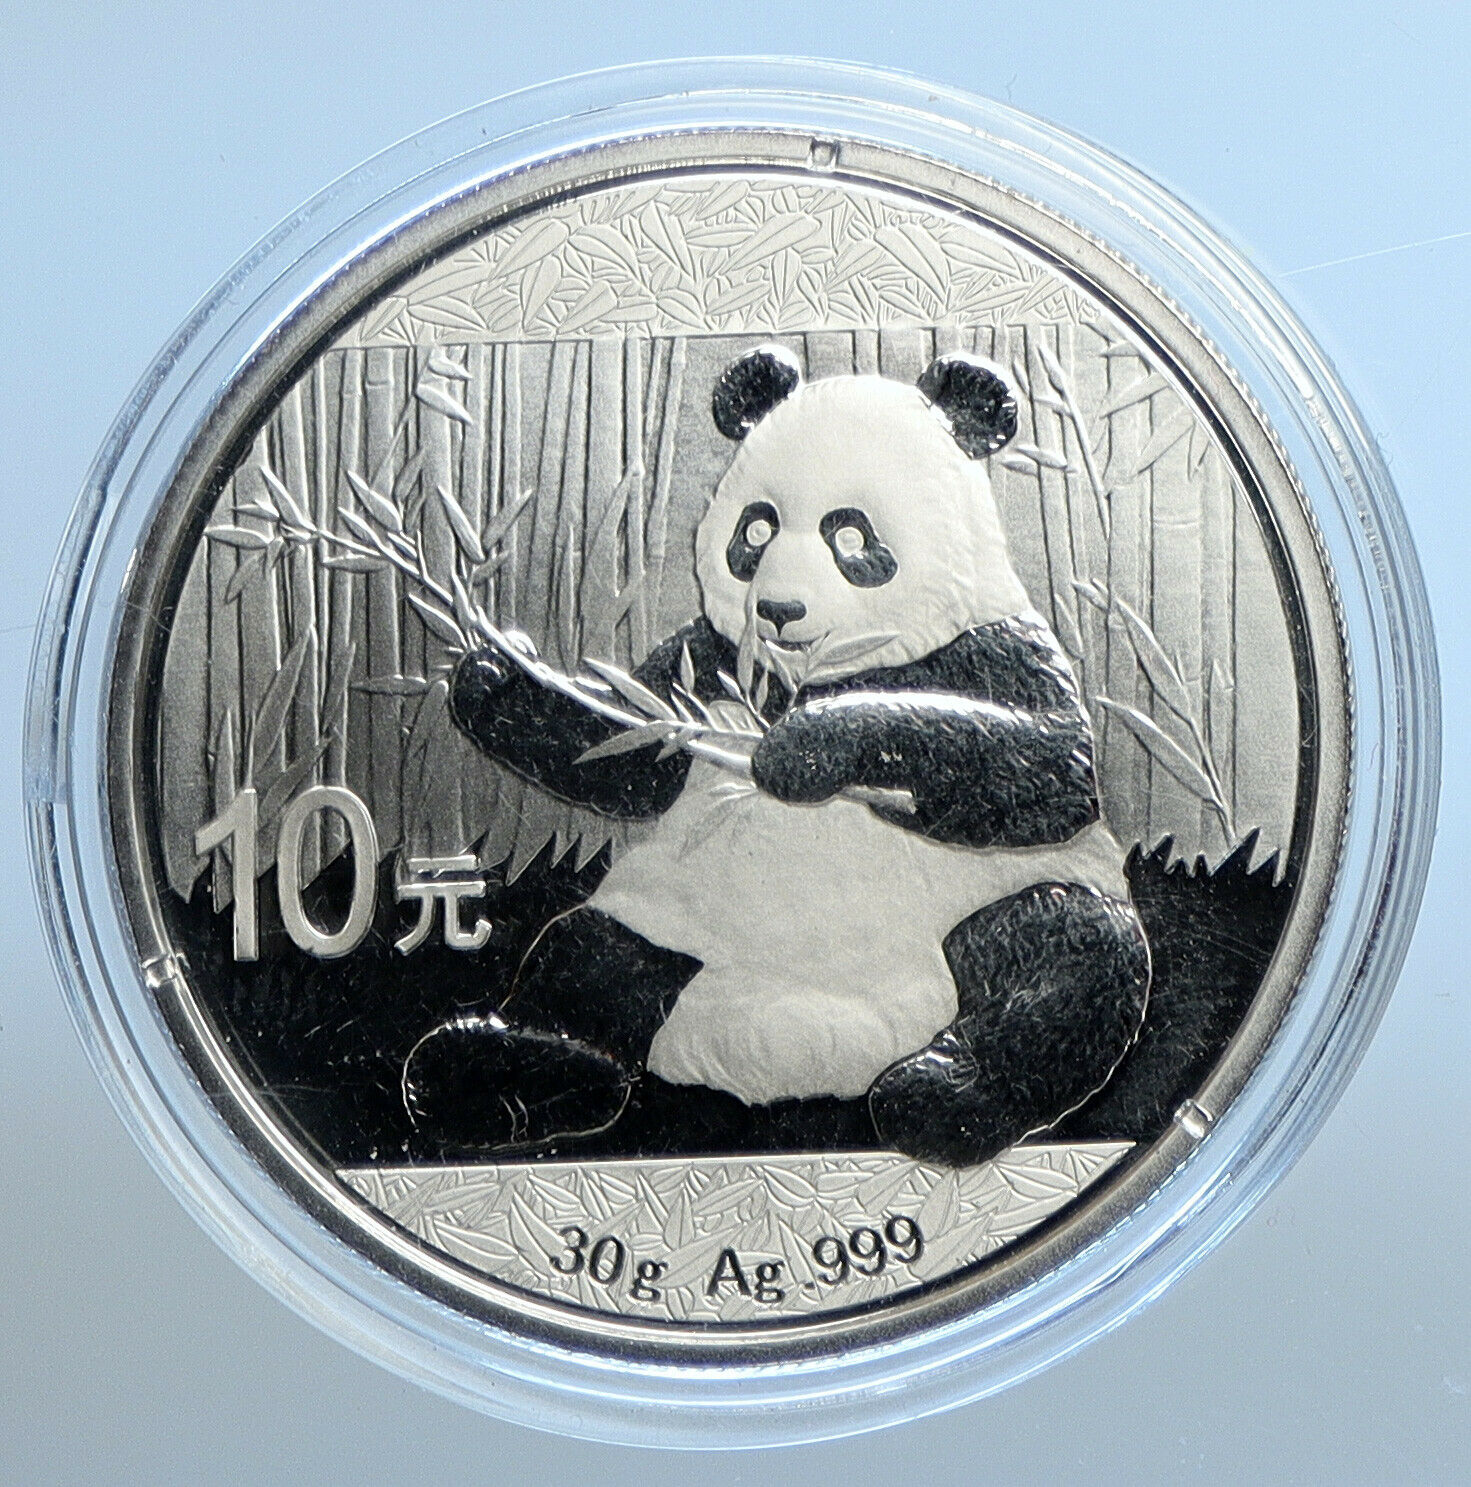 2017 CHINA PANDA Bear & Branch TEMPLE of HEAVEN Silver 10 Yuan Coin i111180